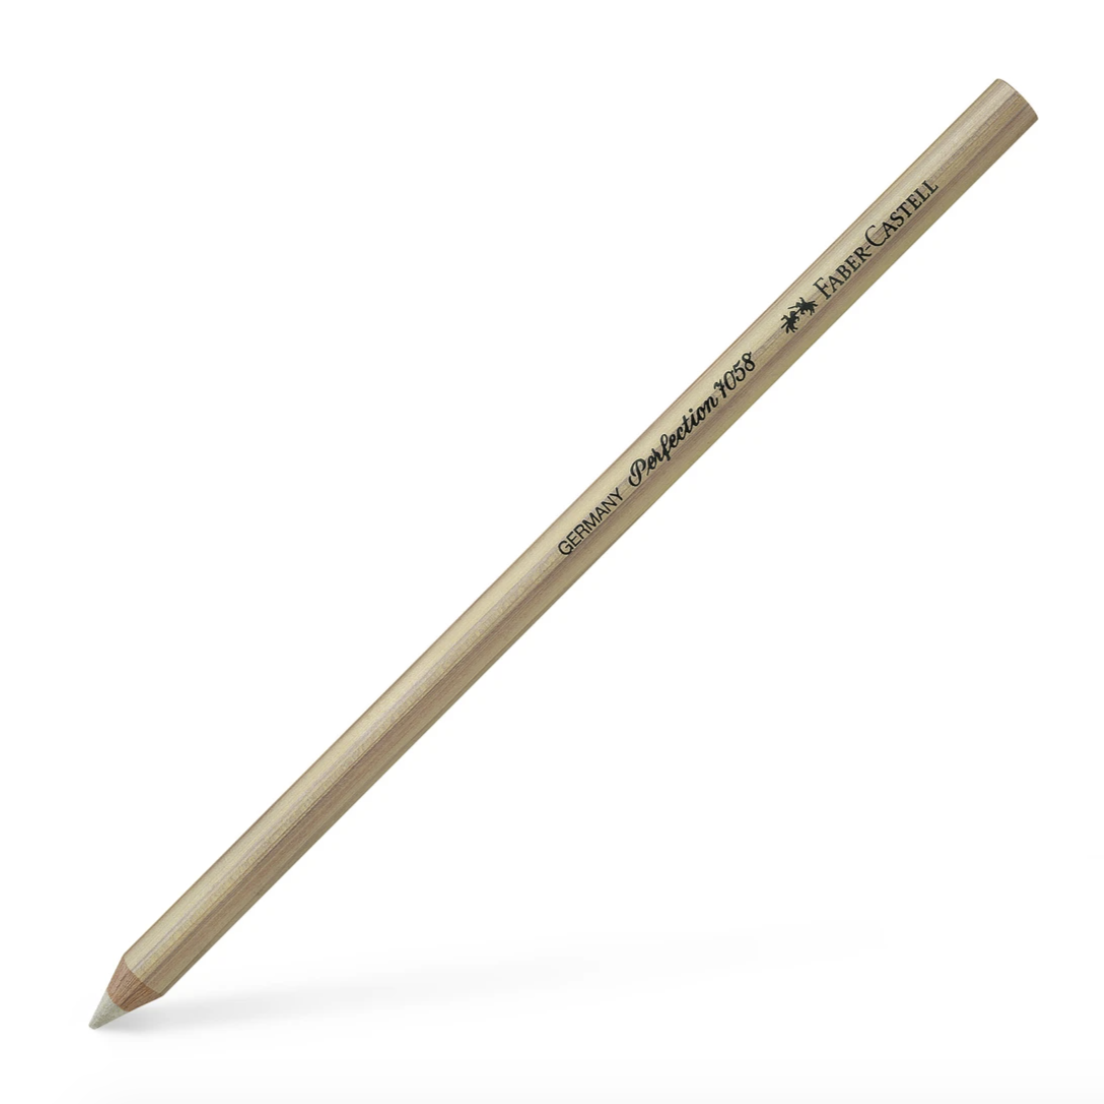 Faber-Castell Perfection Eraser Pencil - Single Eraser - Hard Tip (Light Gray) by Faber-Castell - K. A. Artist Shop